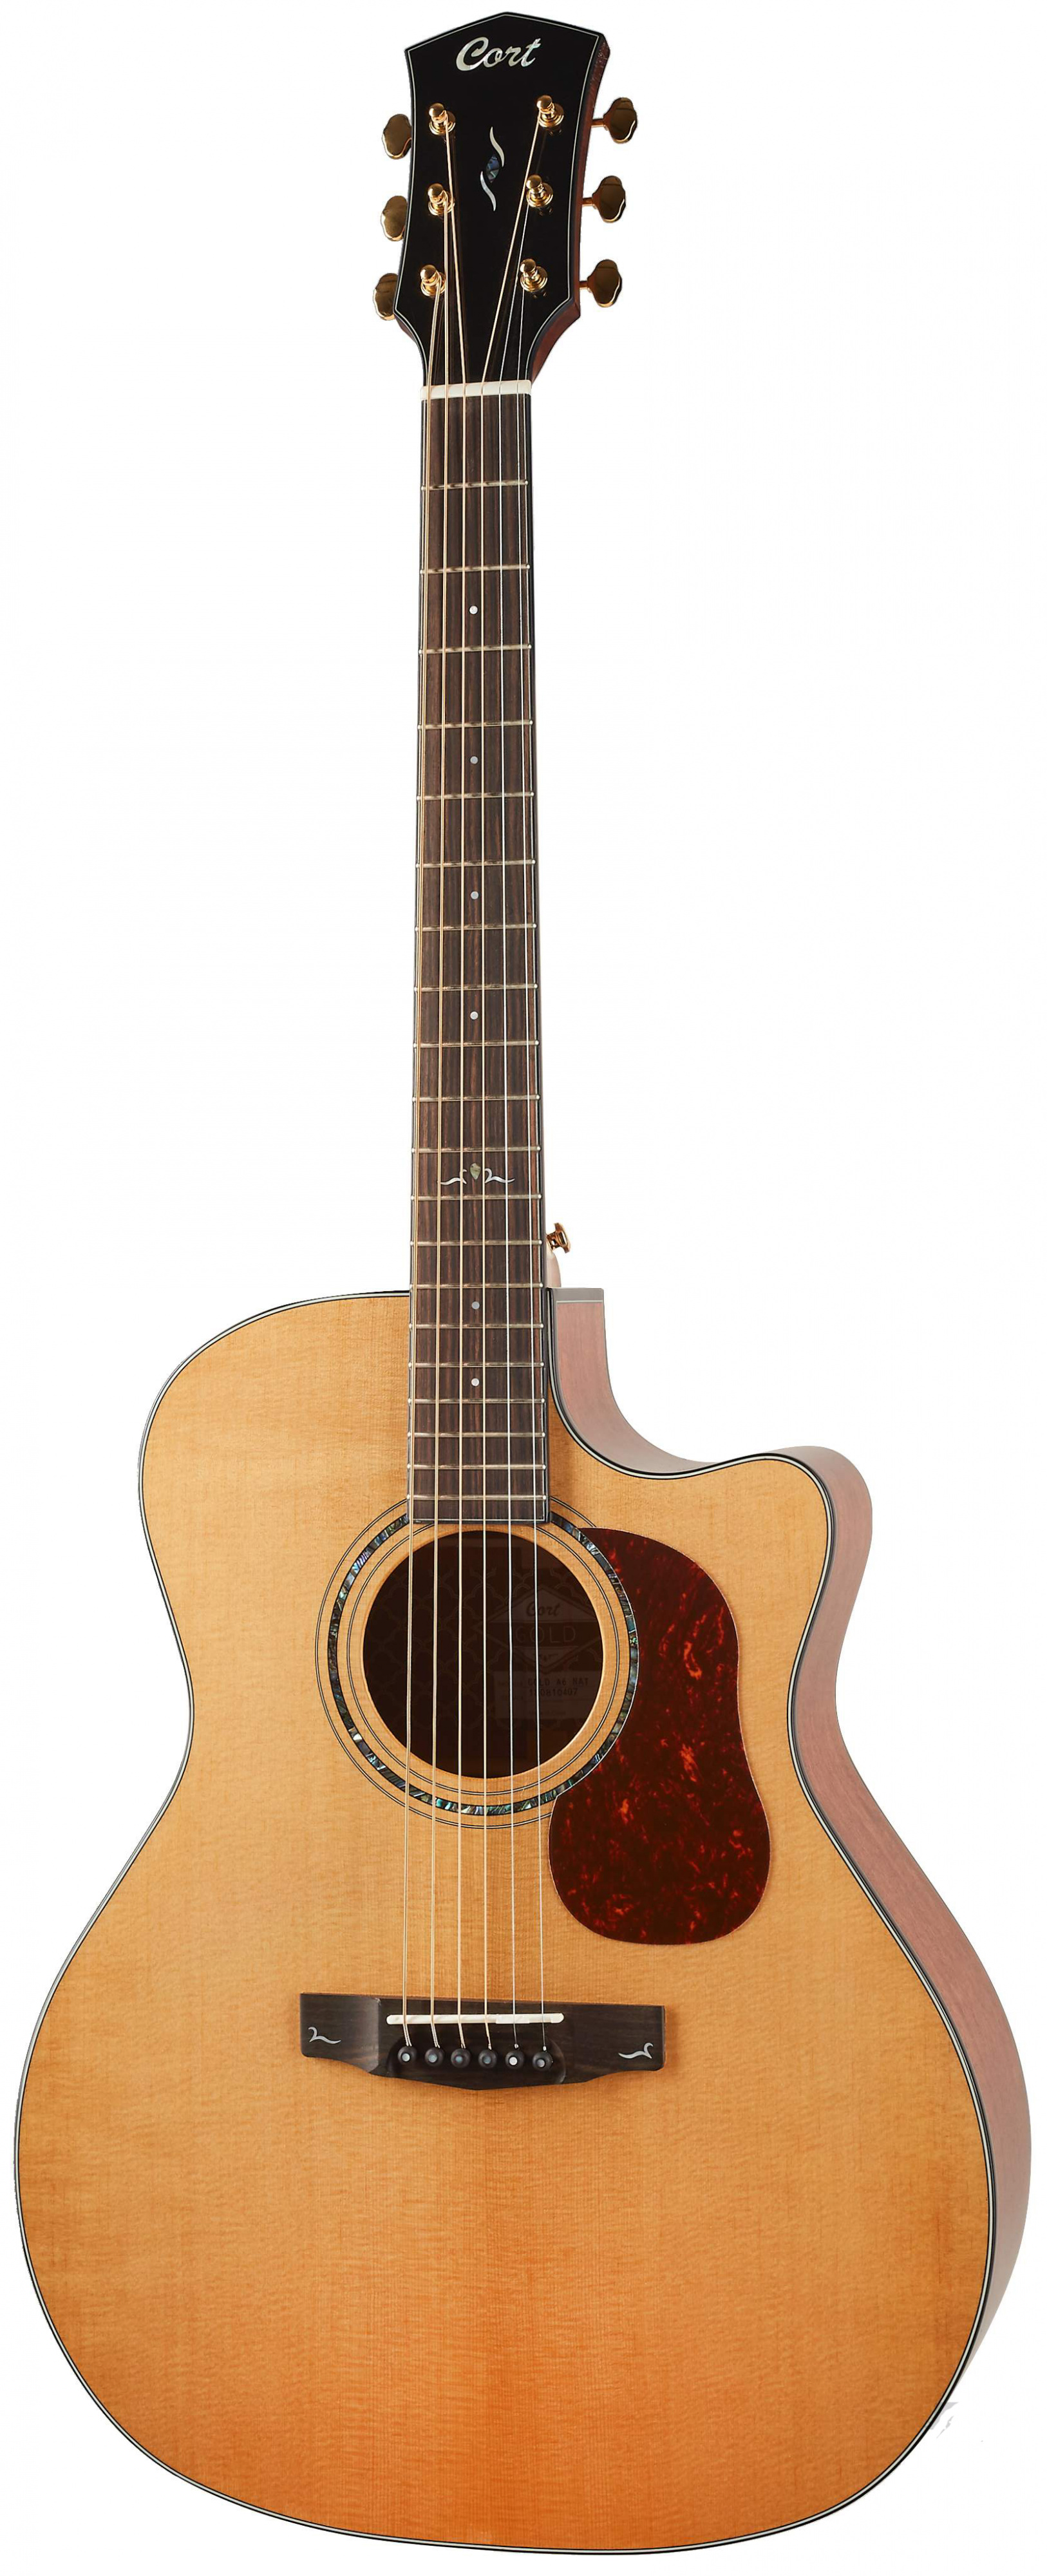 Электроакустические гитары Cort Gold-A6-WCASE-NAT электрогитары cort g290 fat ii wbag tbb чехол в комплекте